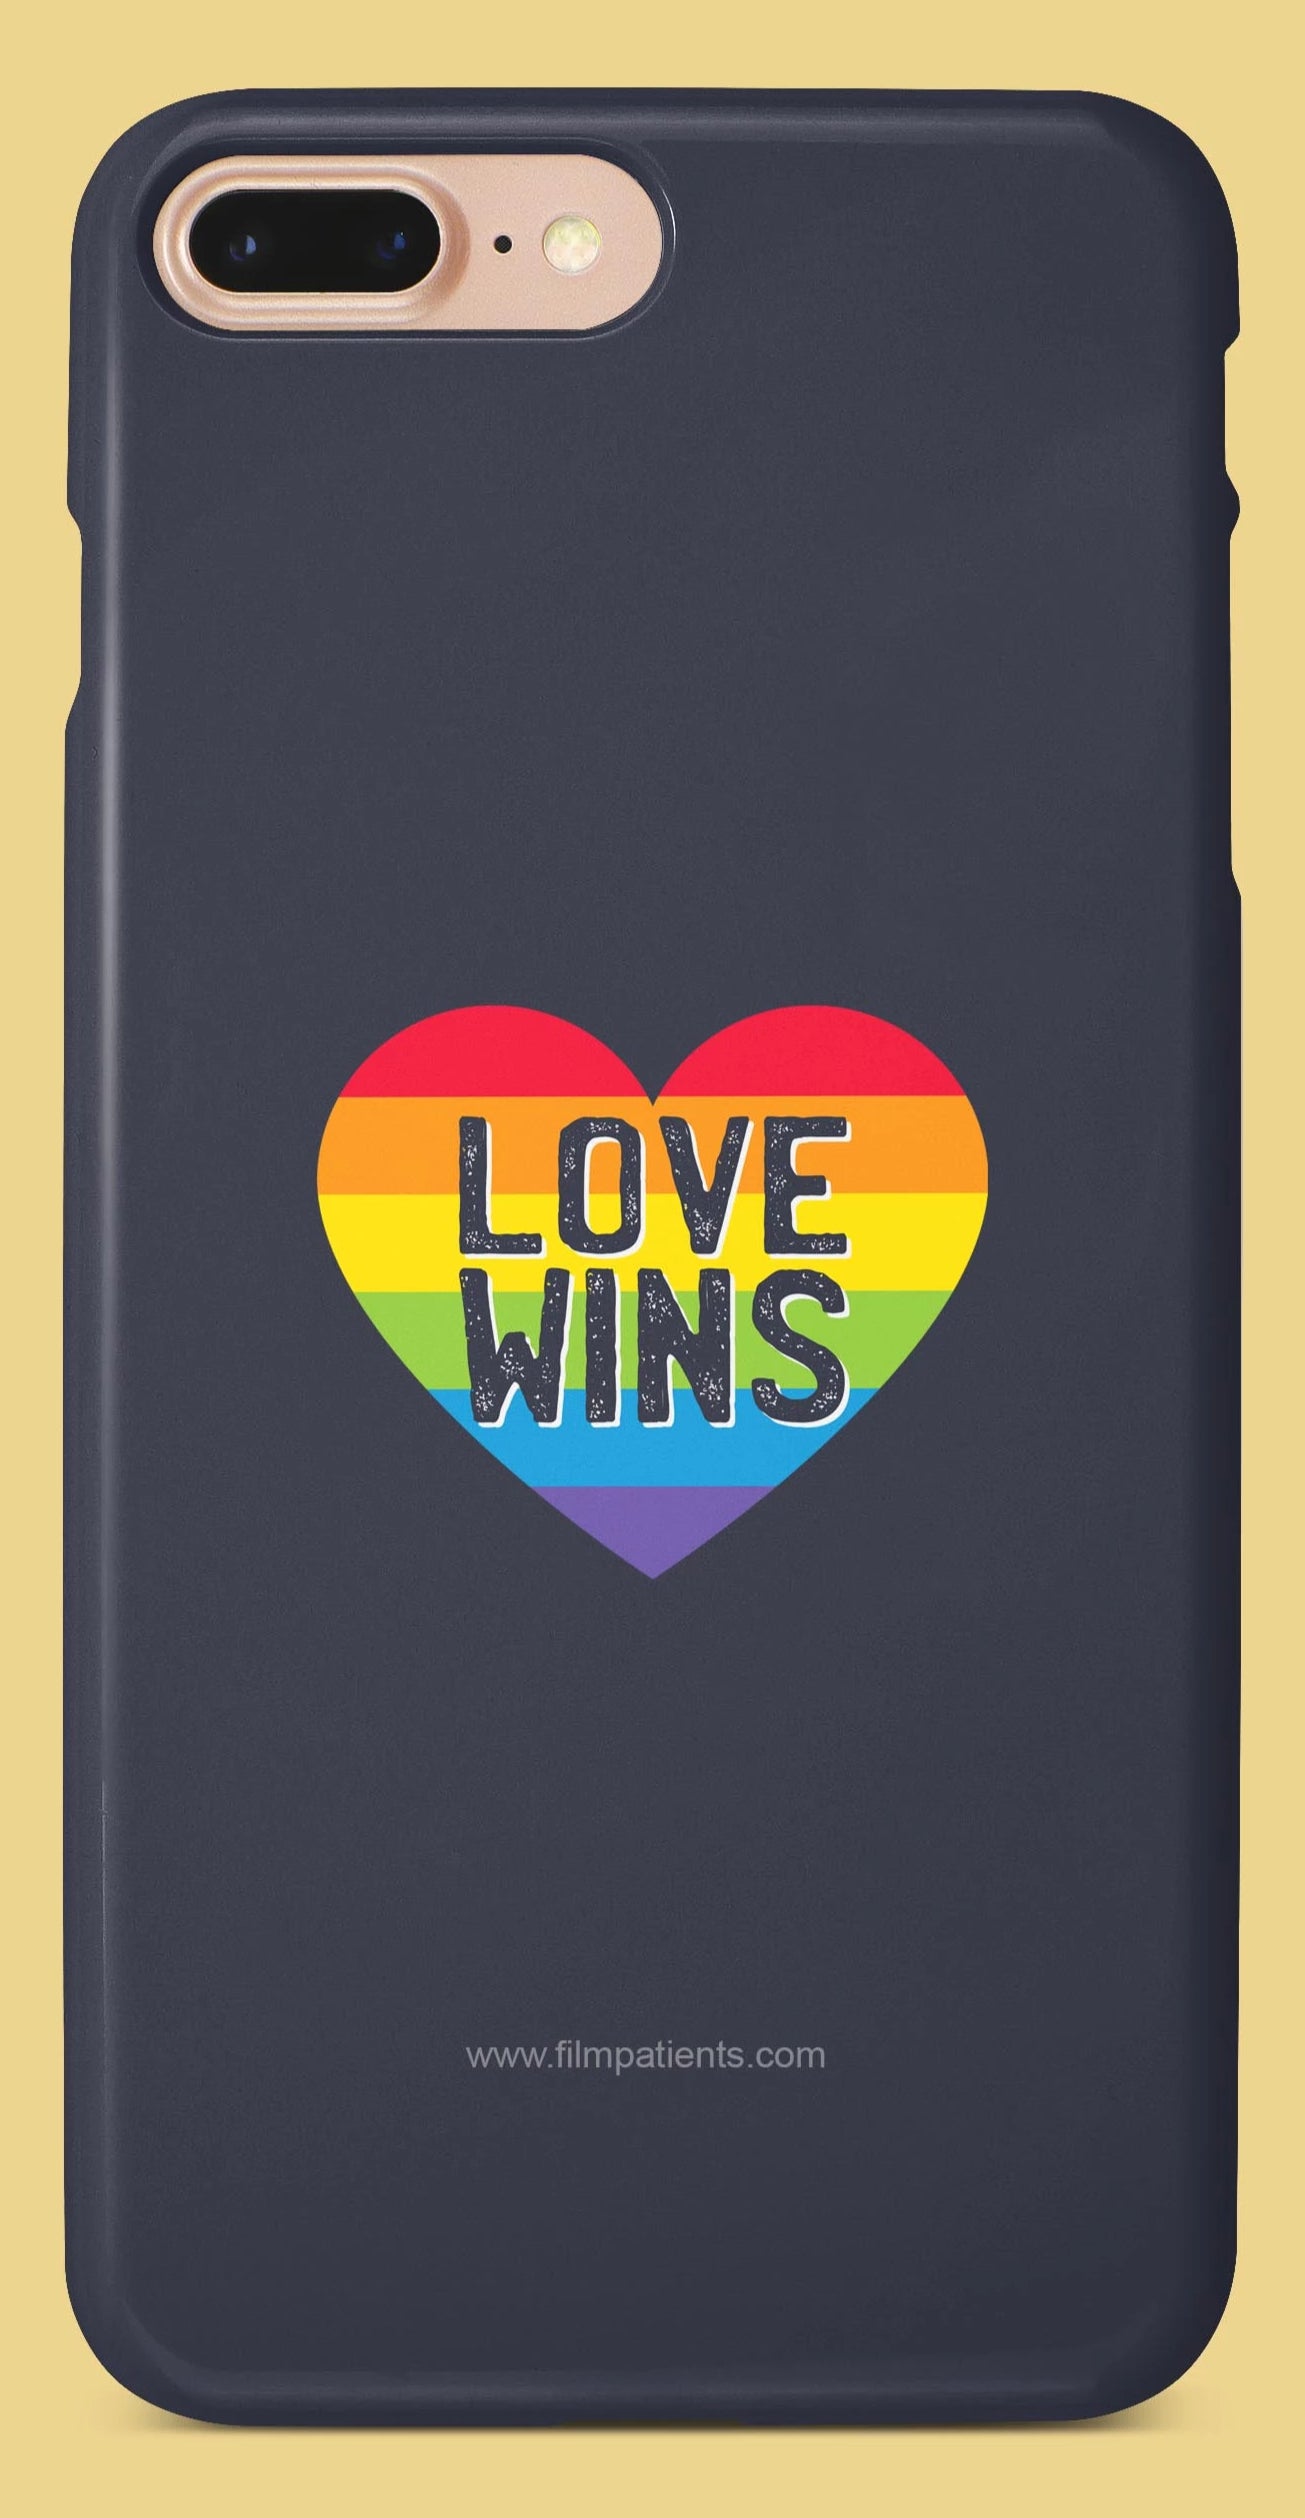 Love Wins Mobile Cover | Film Patients